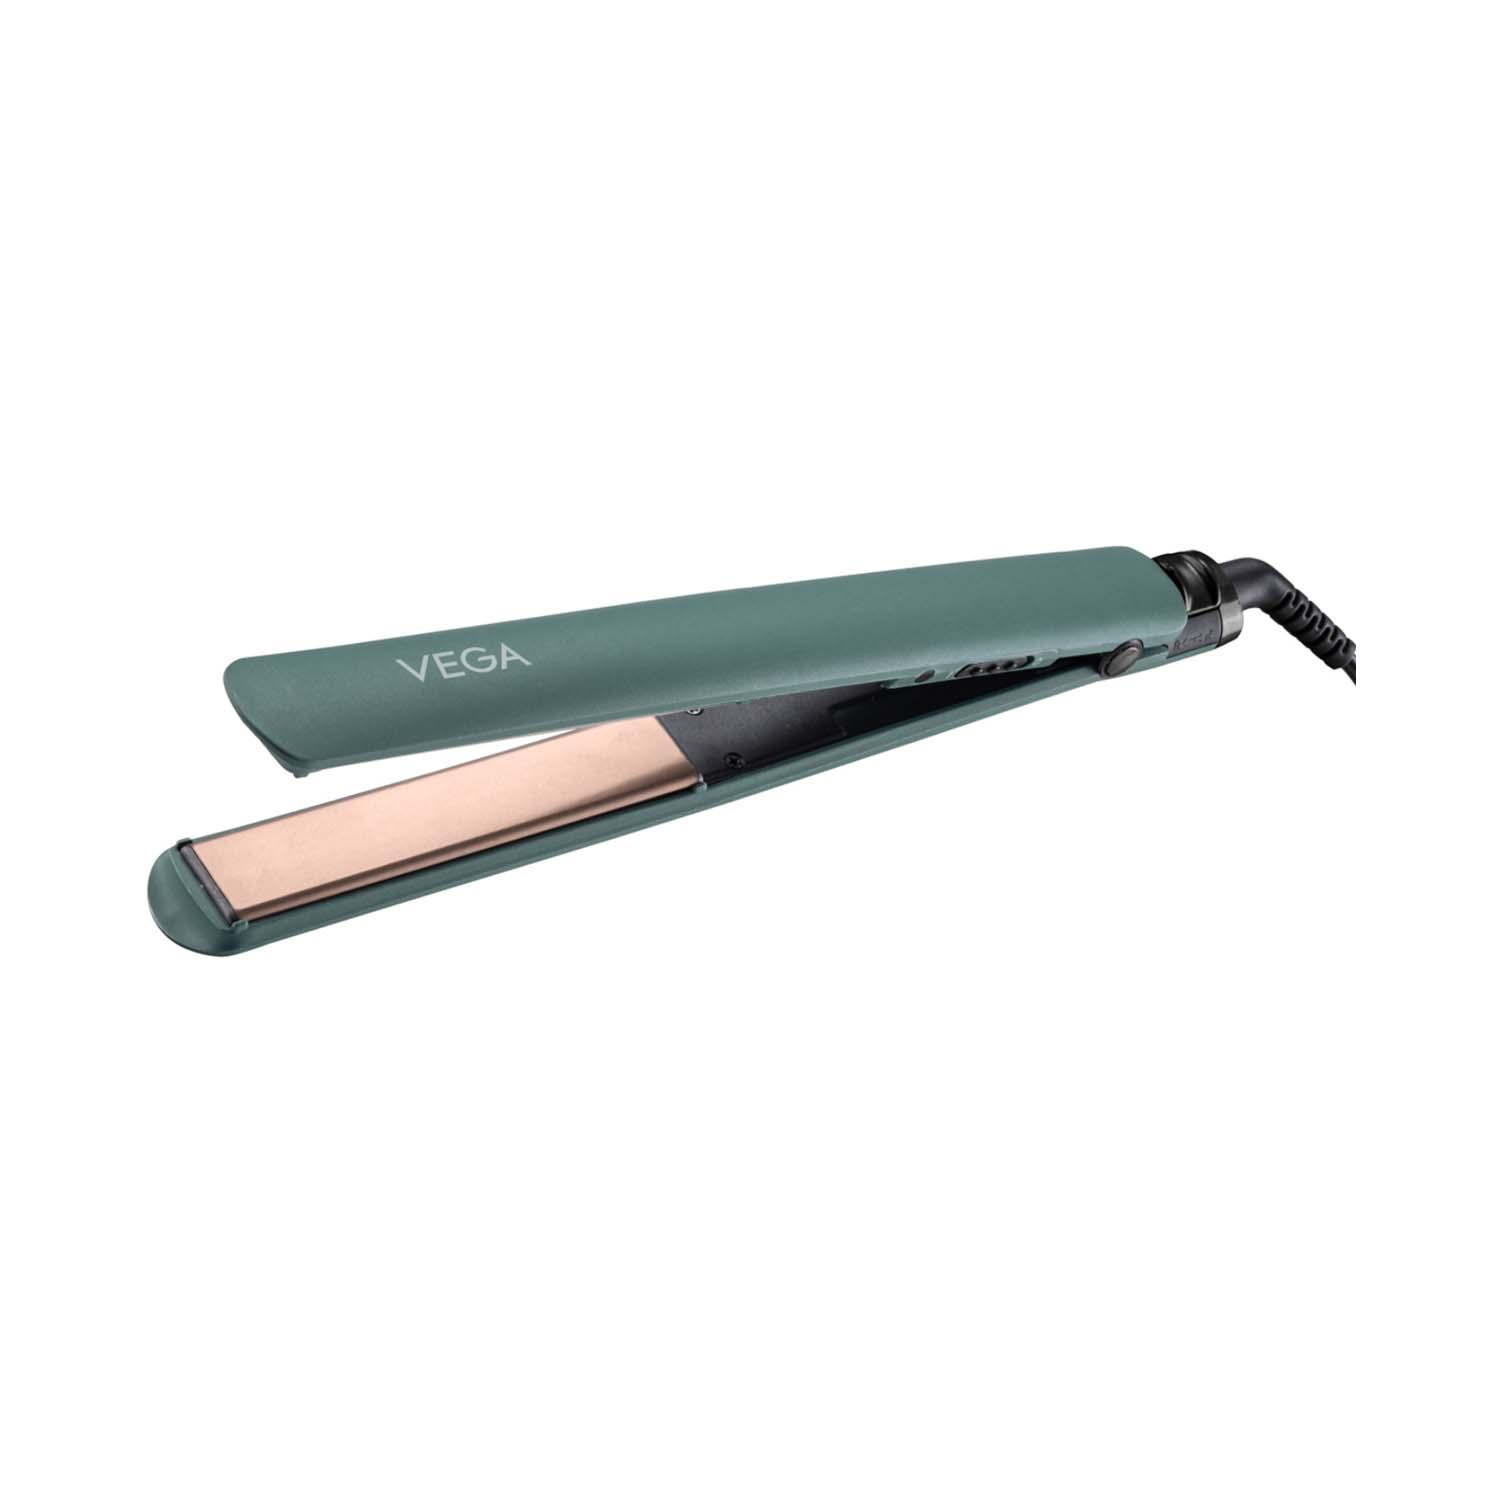 Vega | Vega Salon Smooth Hair Straightener - VHSH-42 - Green